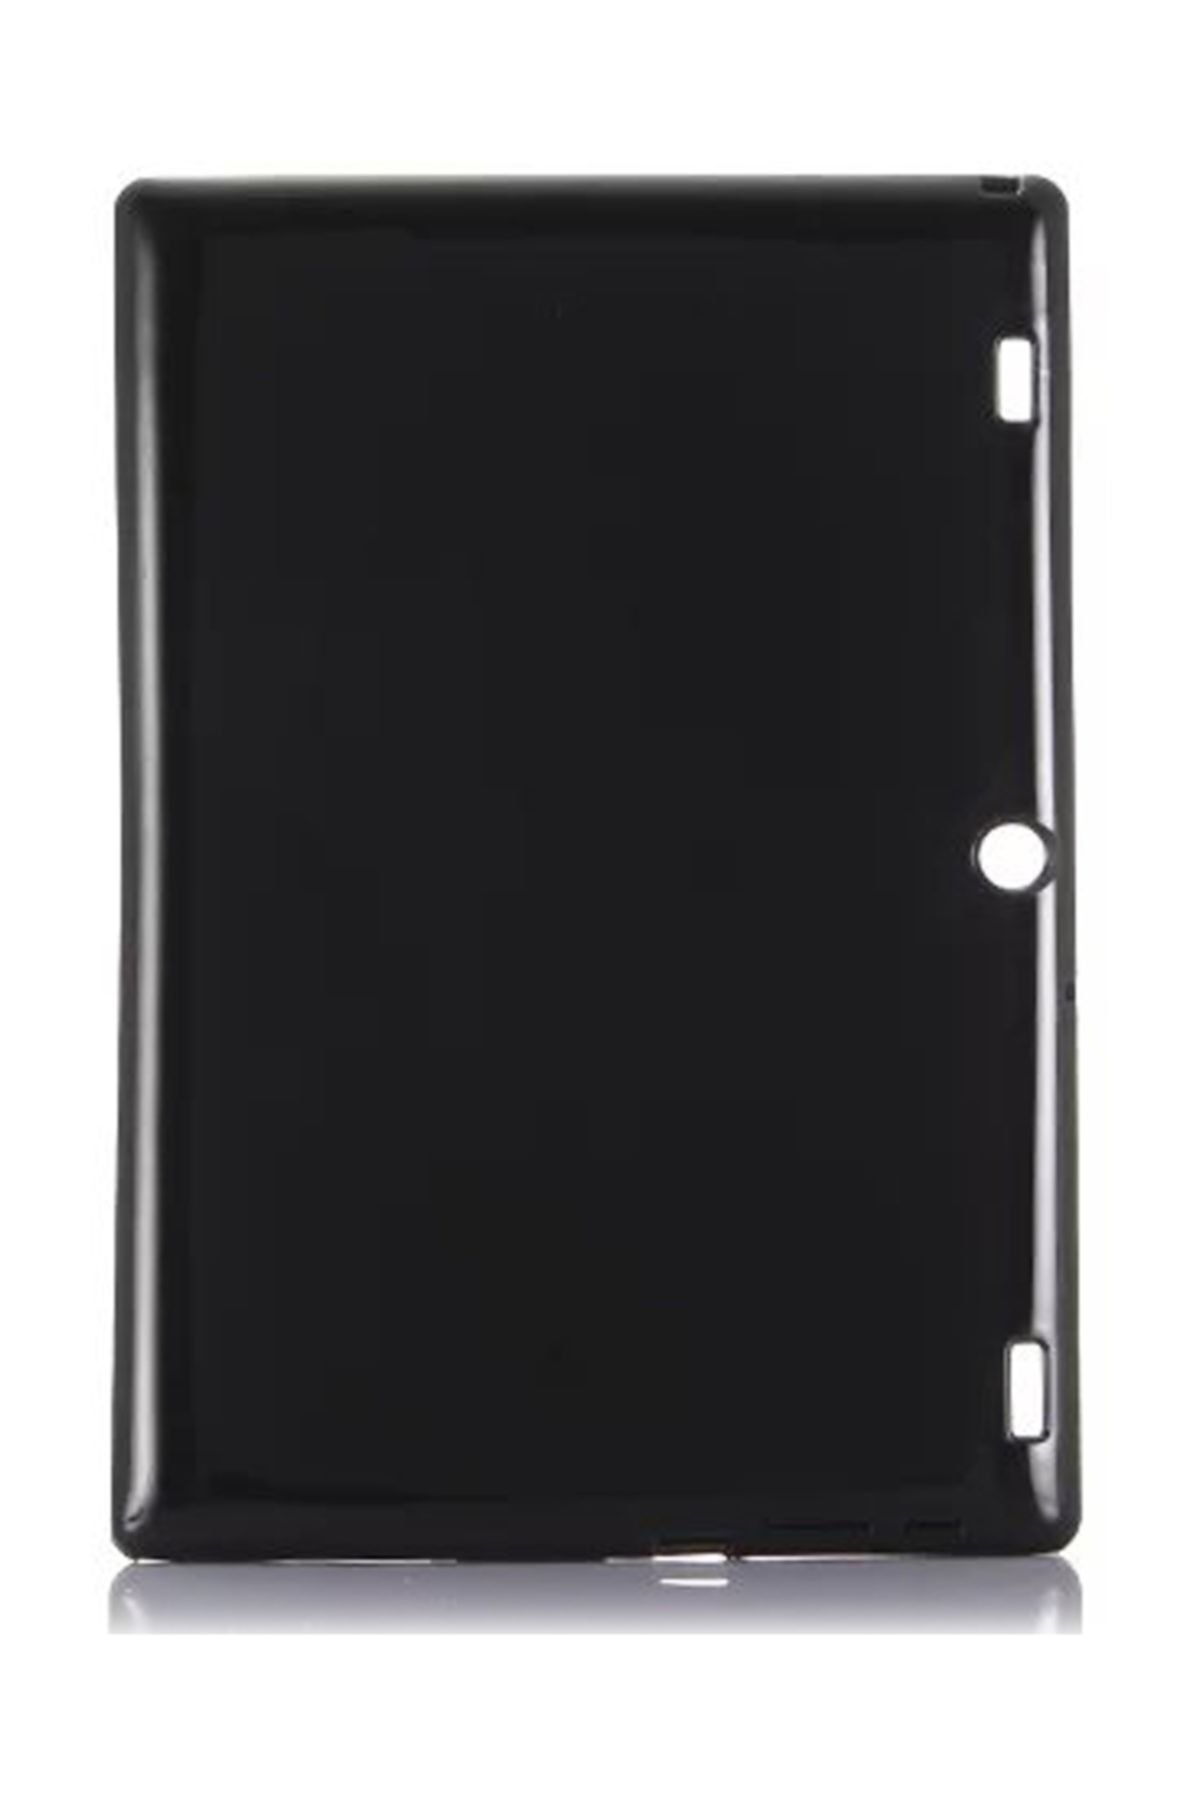 Microcase Lenovo Tab 10 10.1 Tablet Za1u0029tr Silikon Soft Kılıf - Siyah